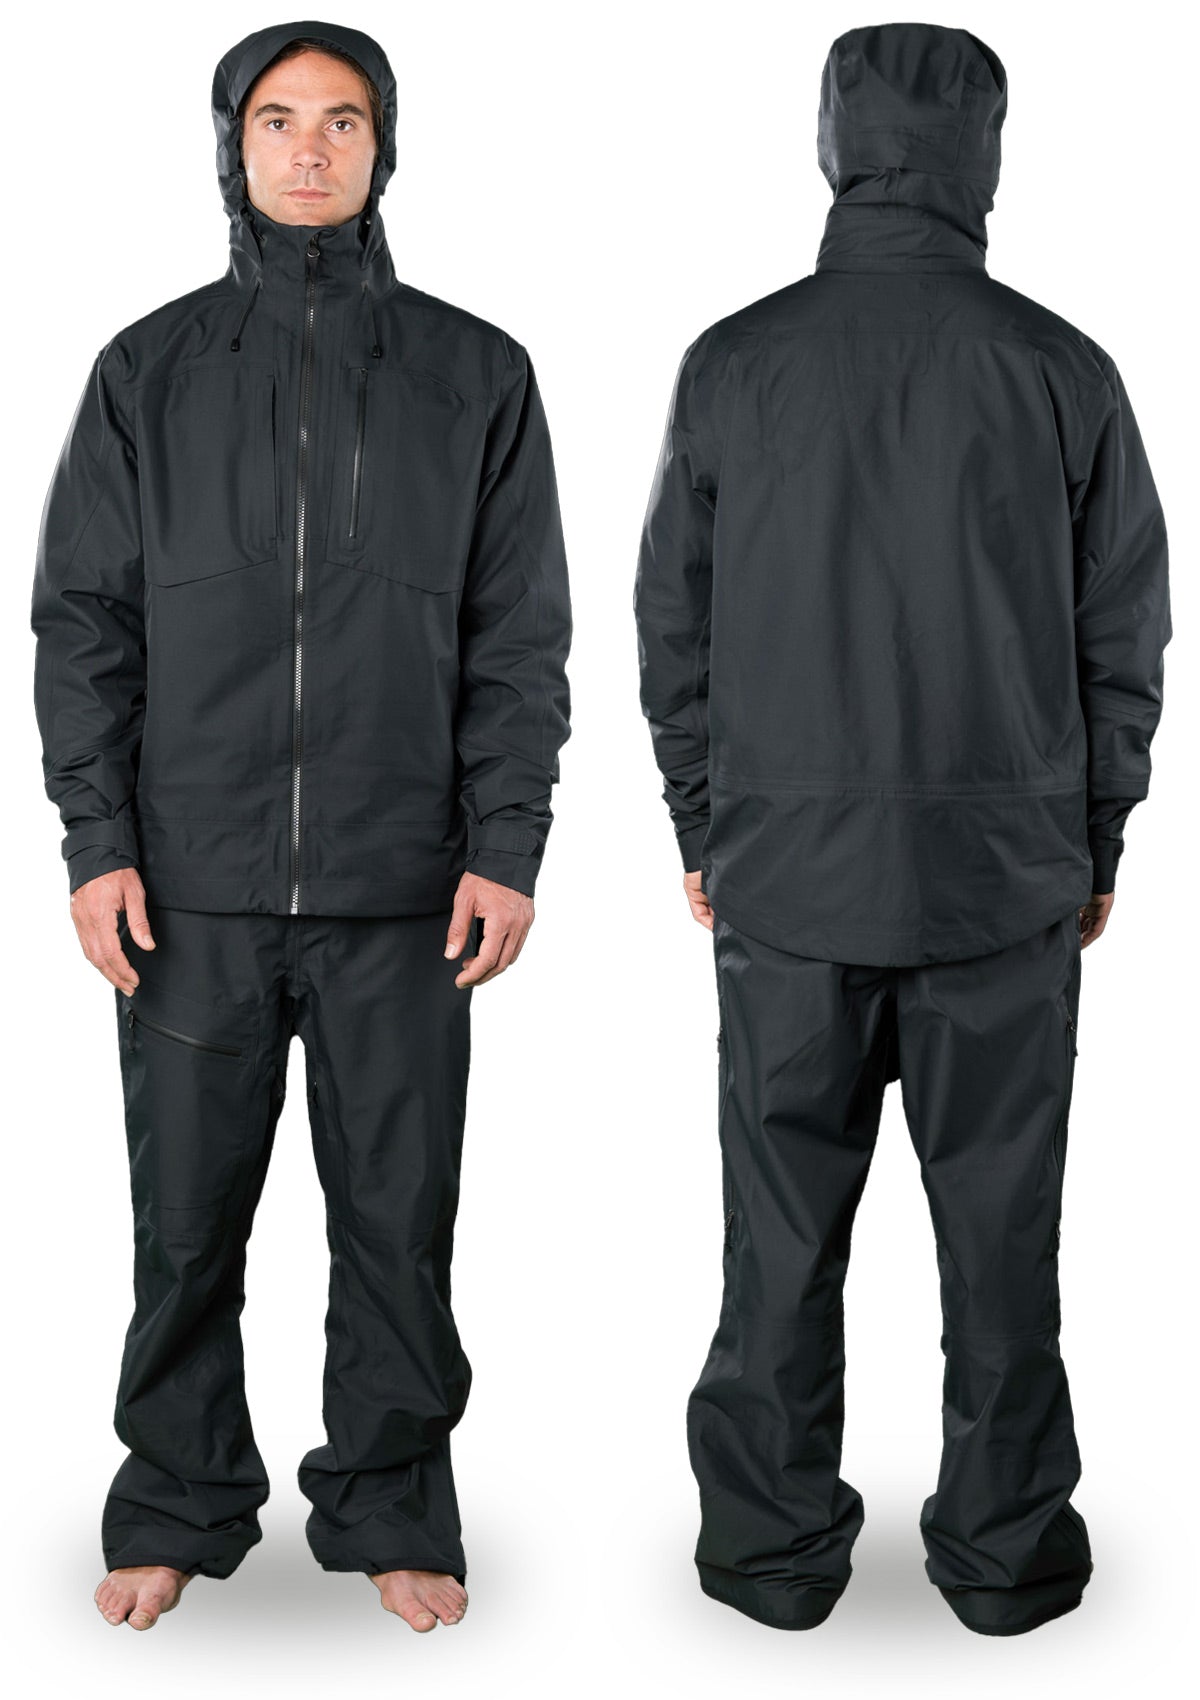 needessentials hard shell jacket black adventure snow jacket non branded